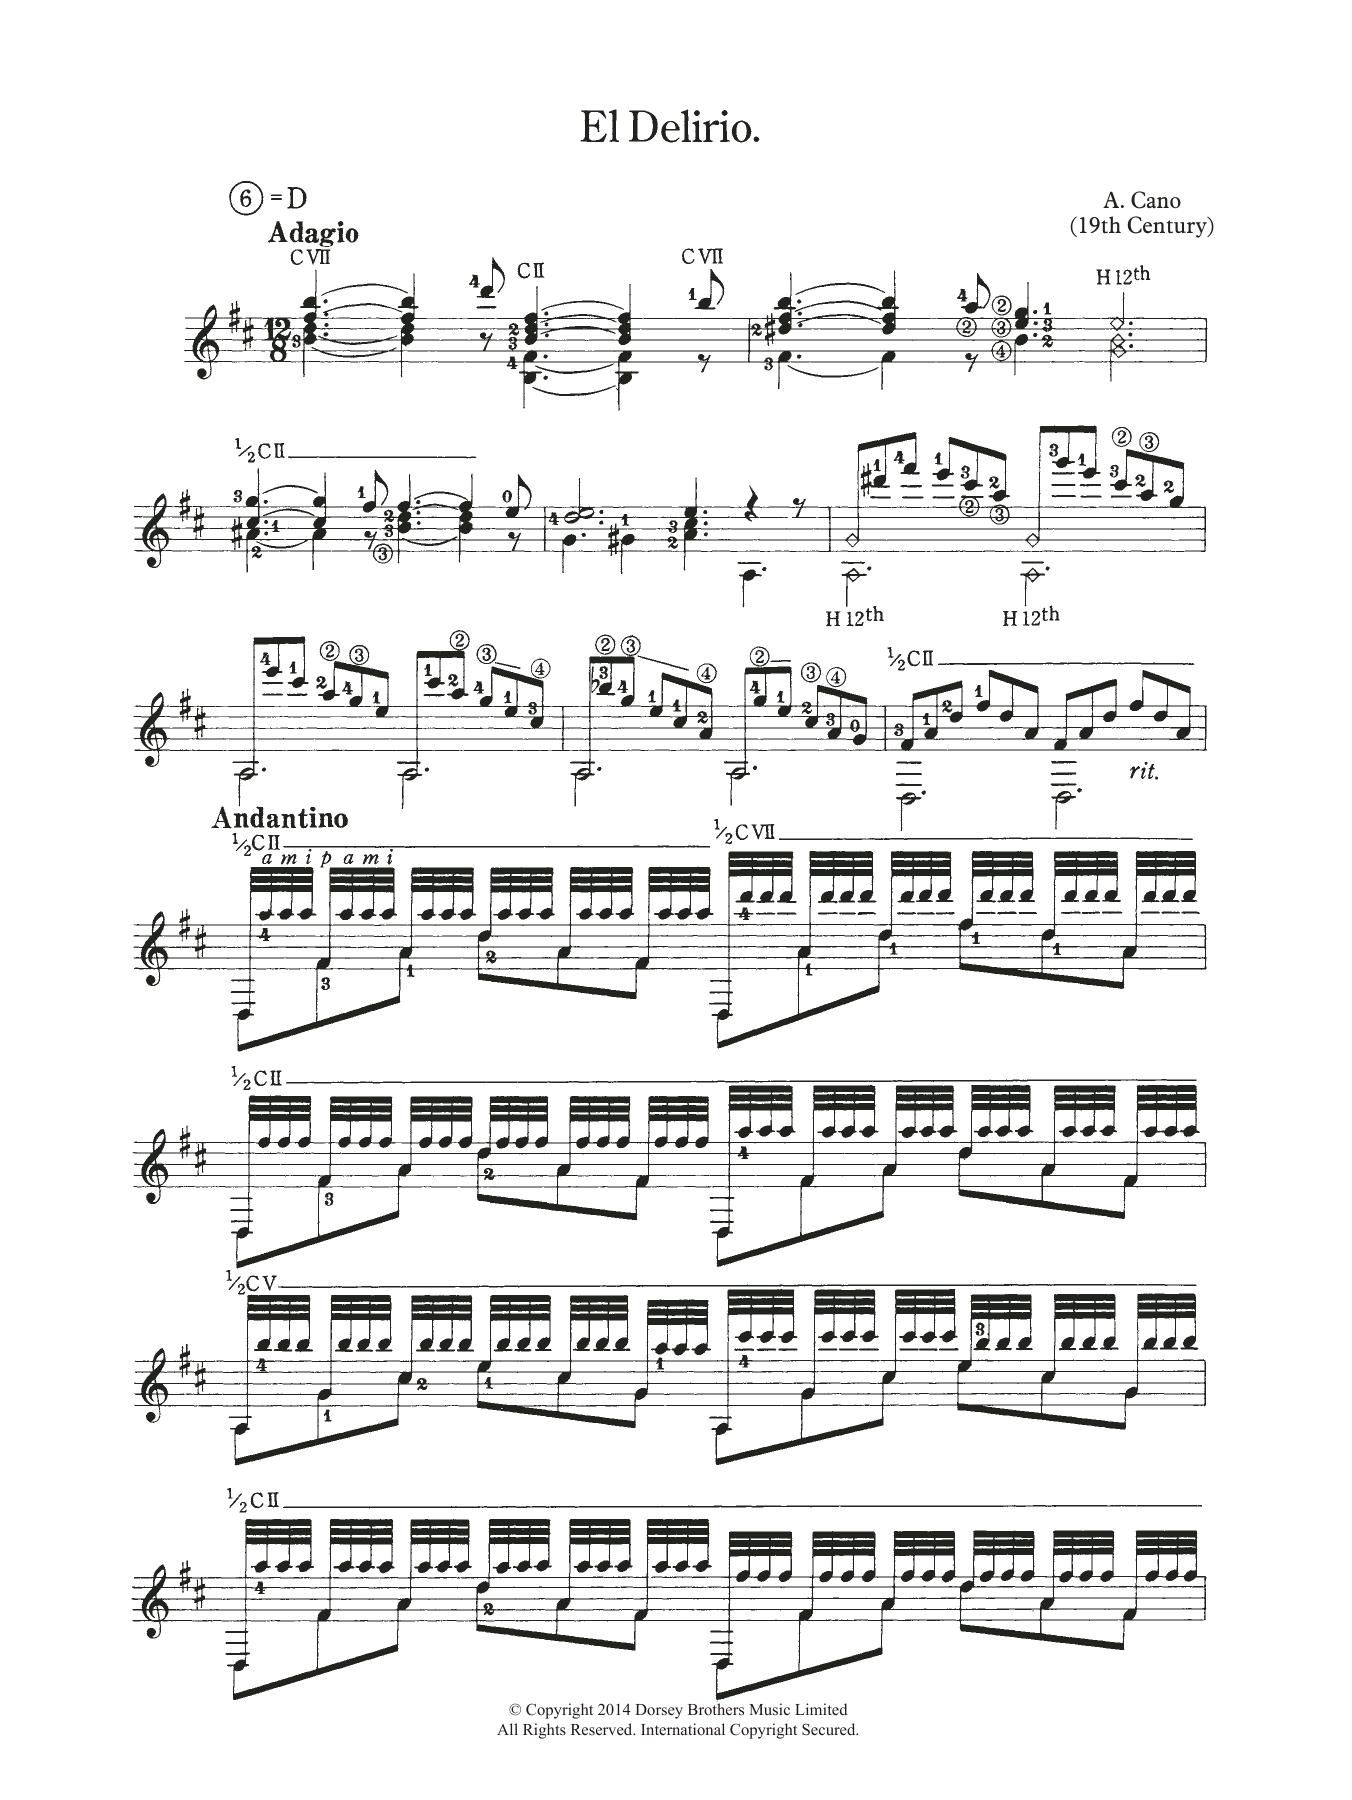 Albert Cano El Delirio Sheet Music Notes & Chords for Guitar - Download or Print PDF